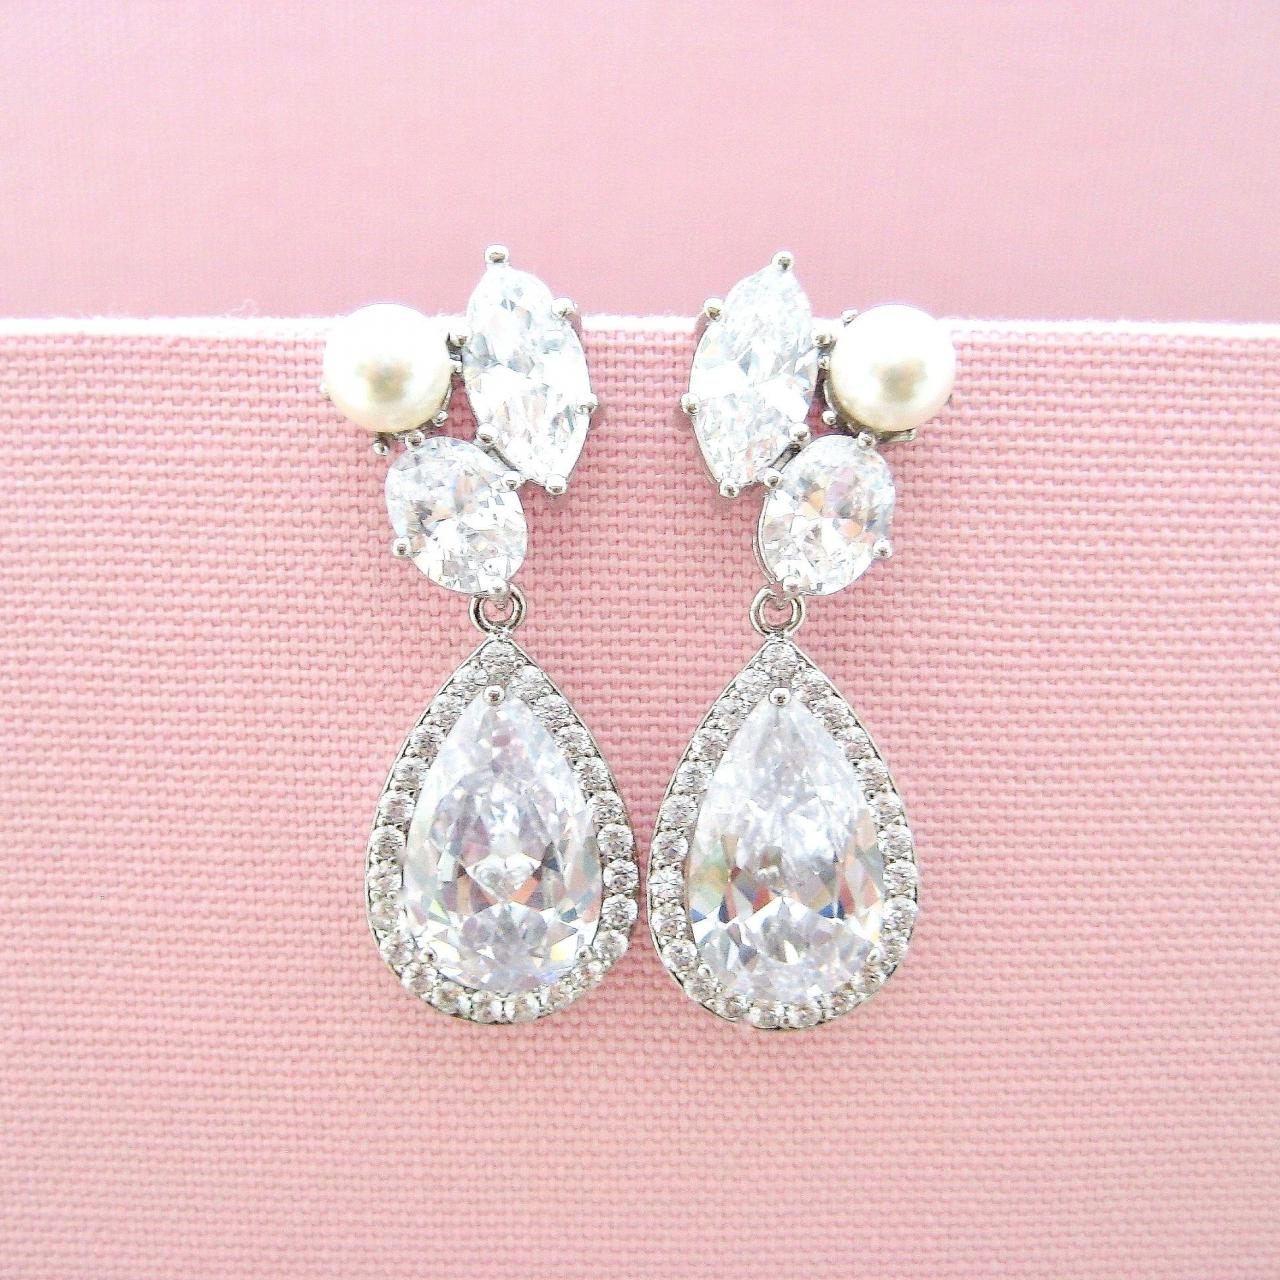 Bridal Crystal Earrings Cubic Zirconia Teardrop Wedding Earrings Swarovski Pearl Earrings Rhinestone Earrings Bridesmaids Gift (e312)